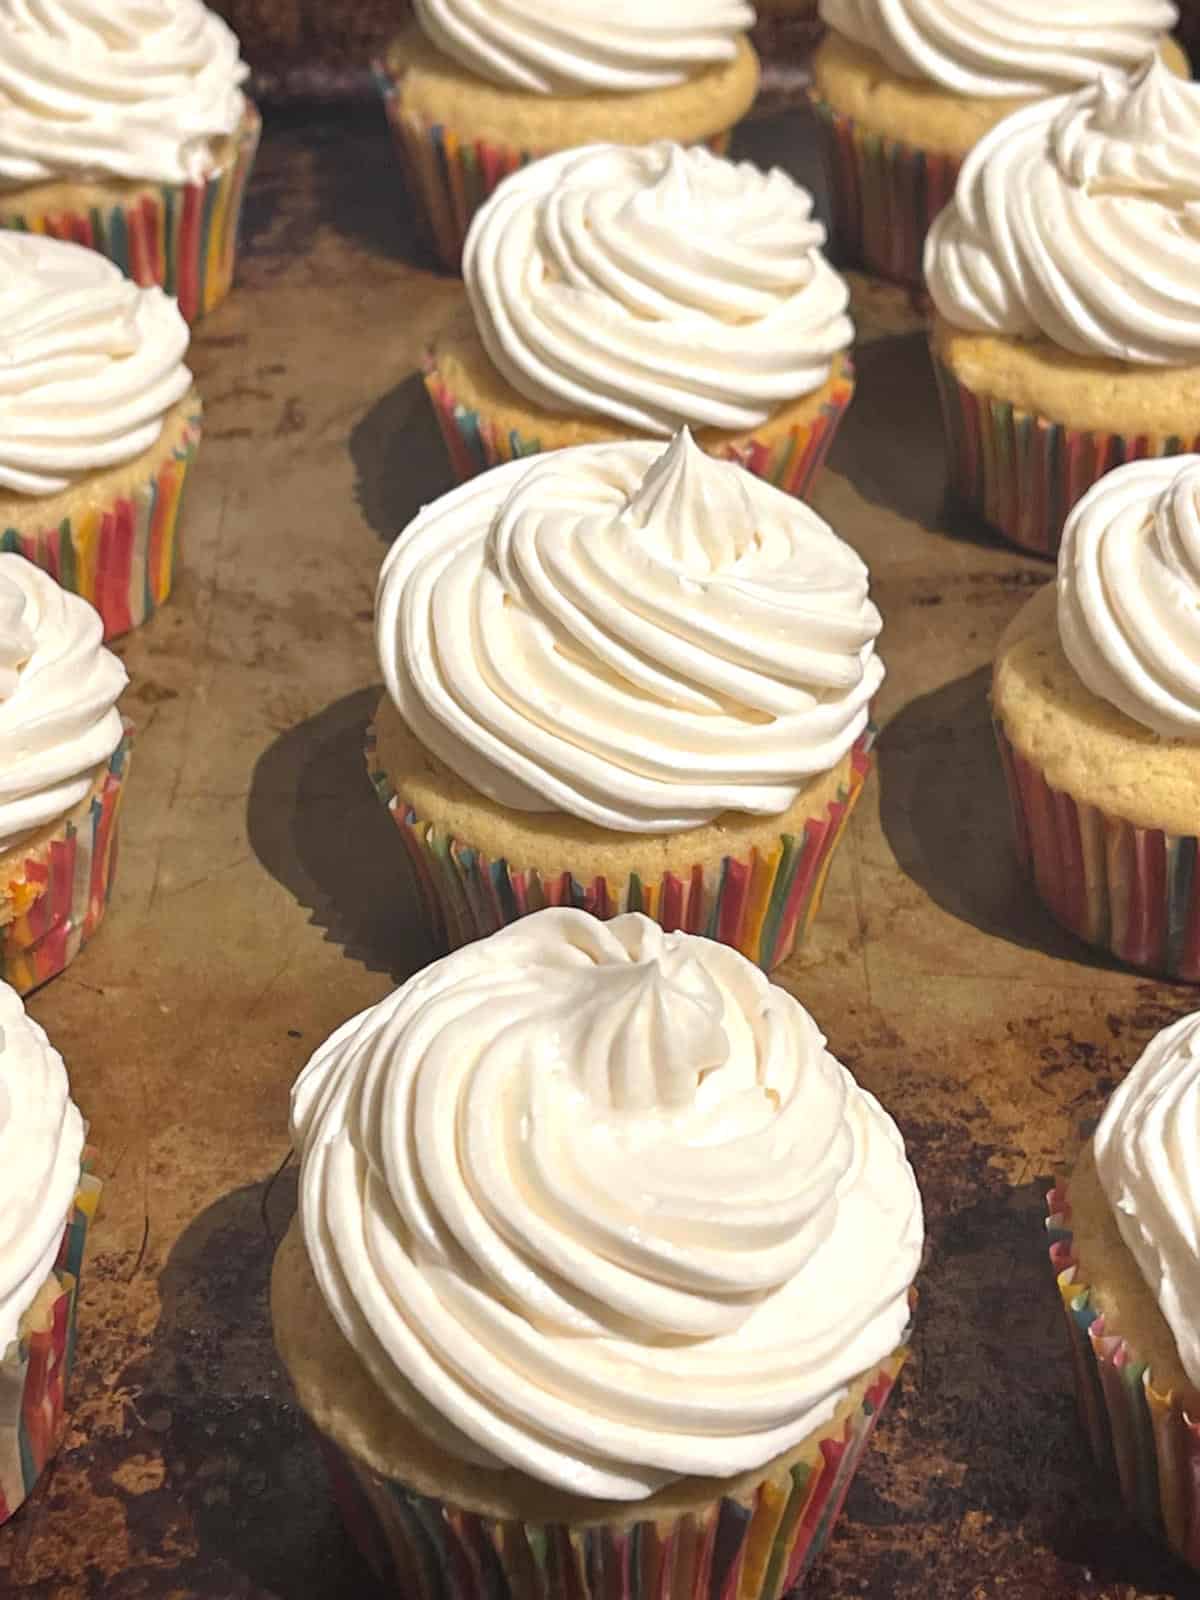 Frosted vegan vanilla cupcakes on baking sheet.